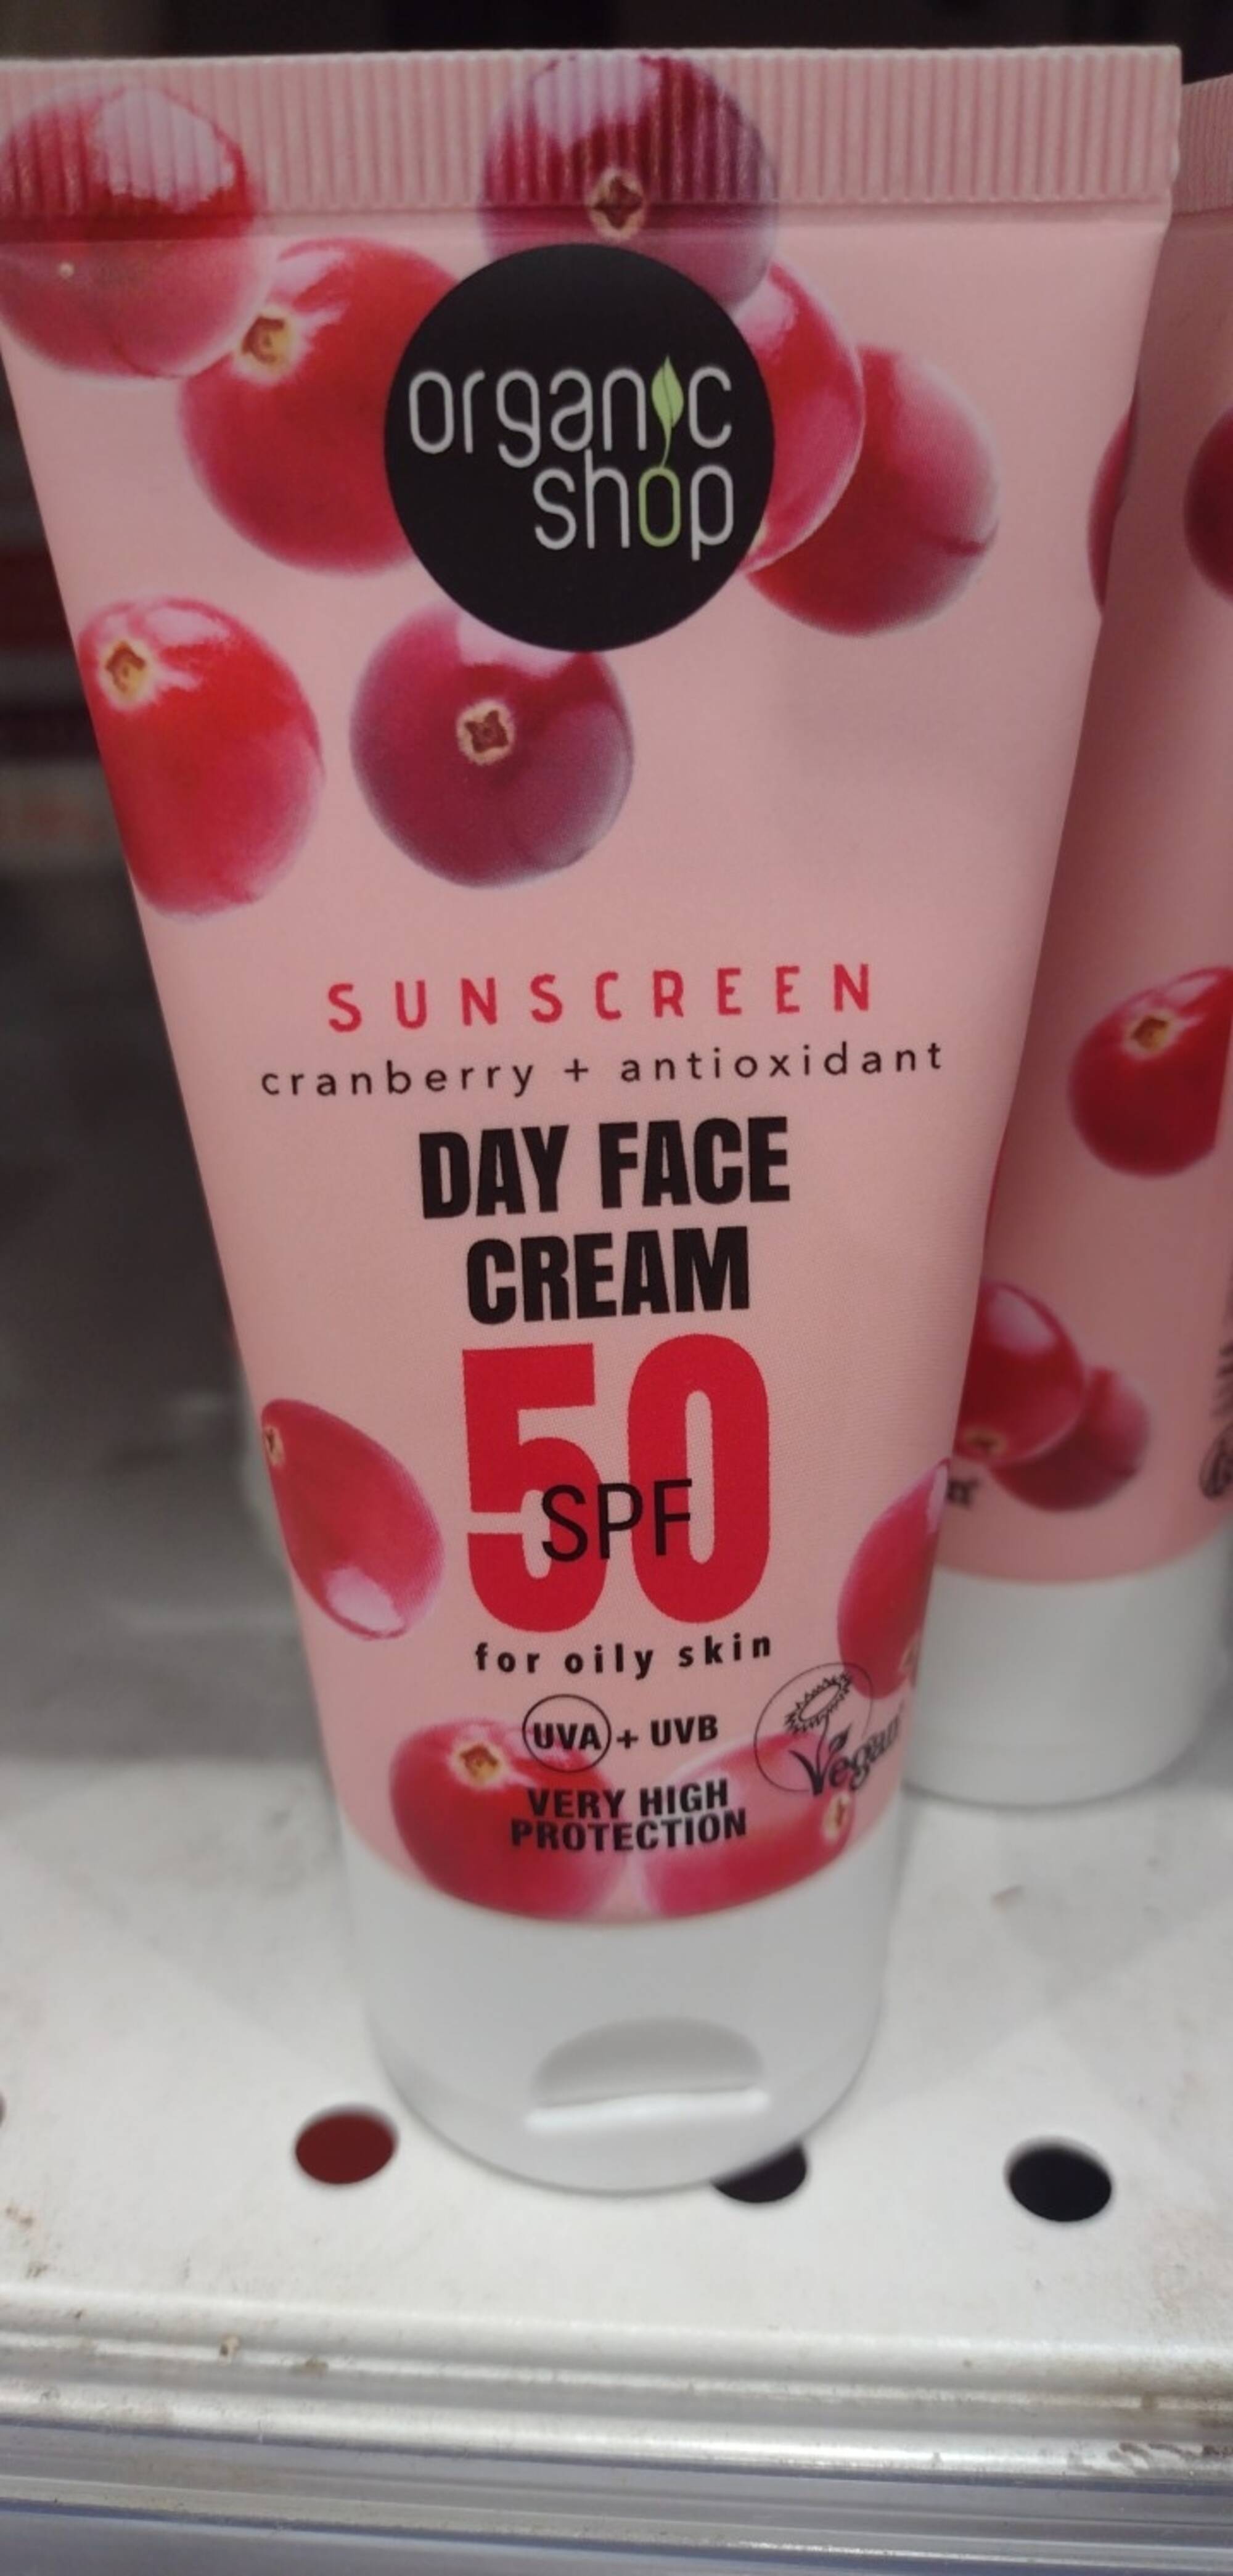 ORGANIC SHOP - Sunscreen day face cream spf50